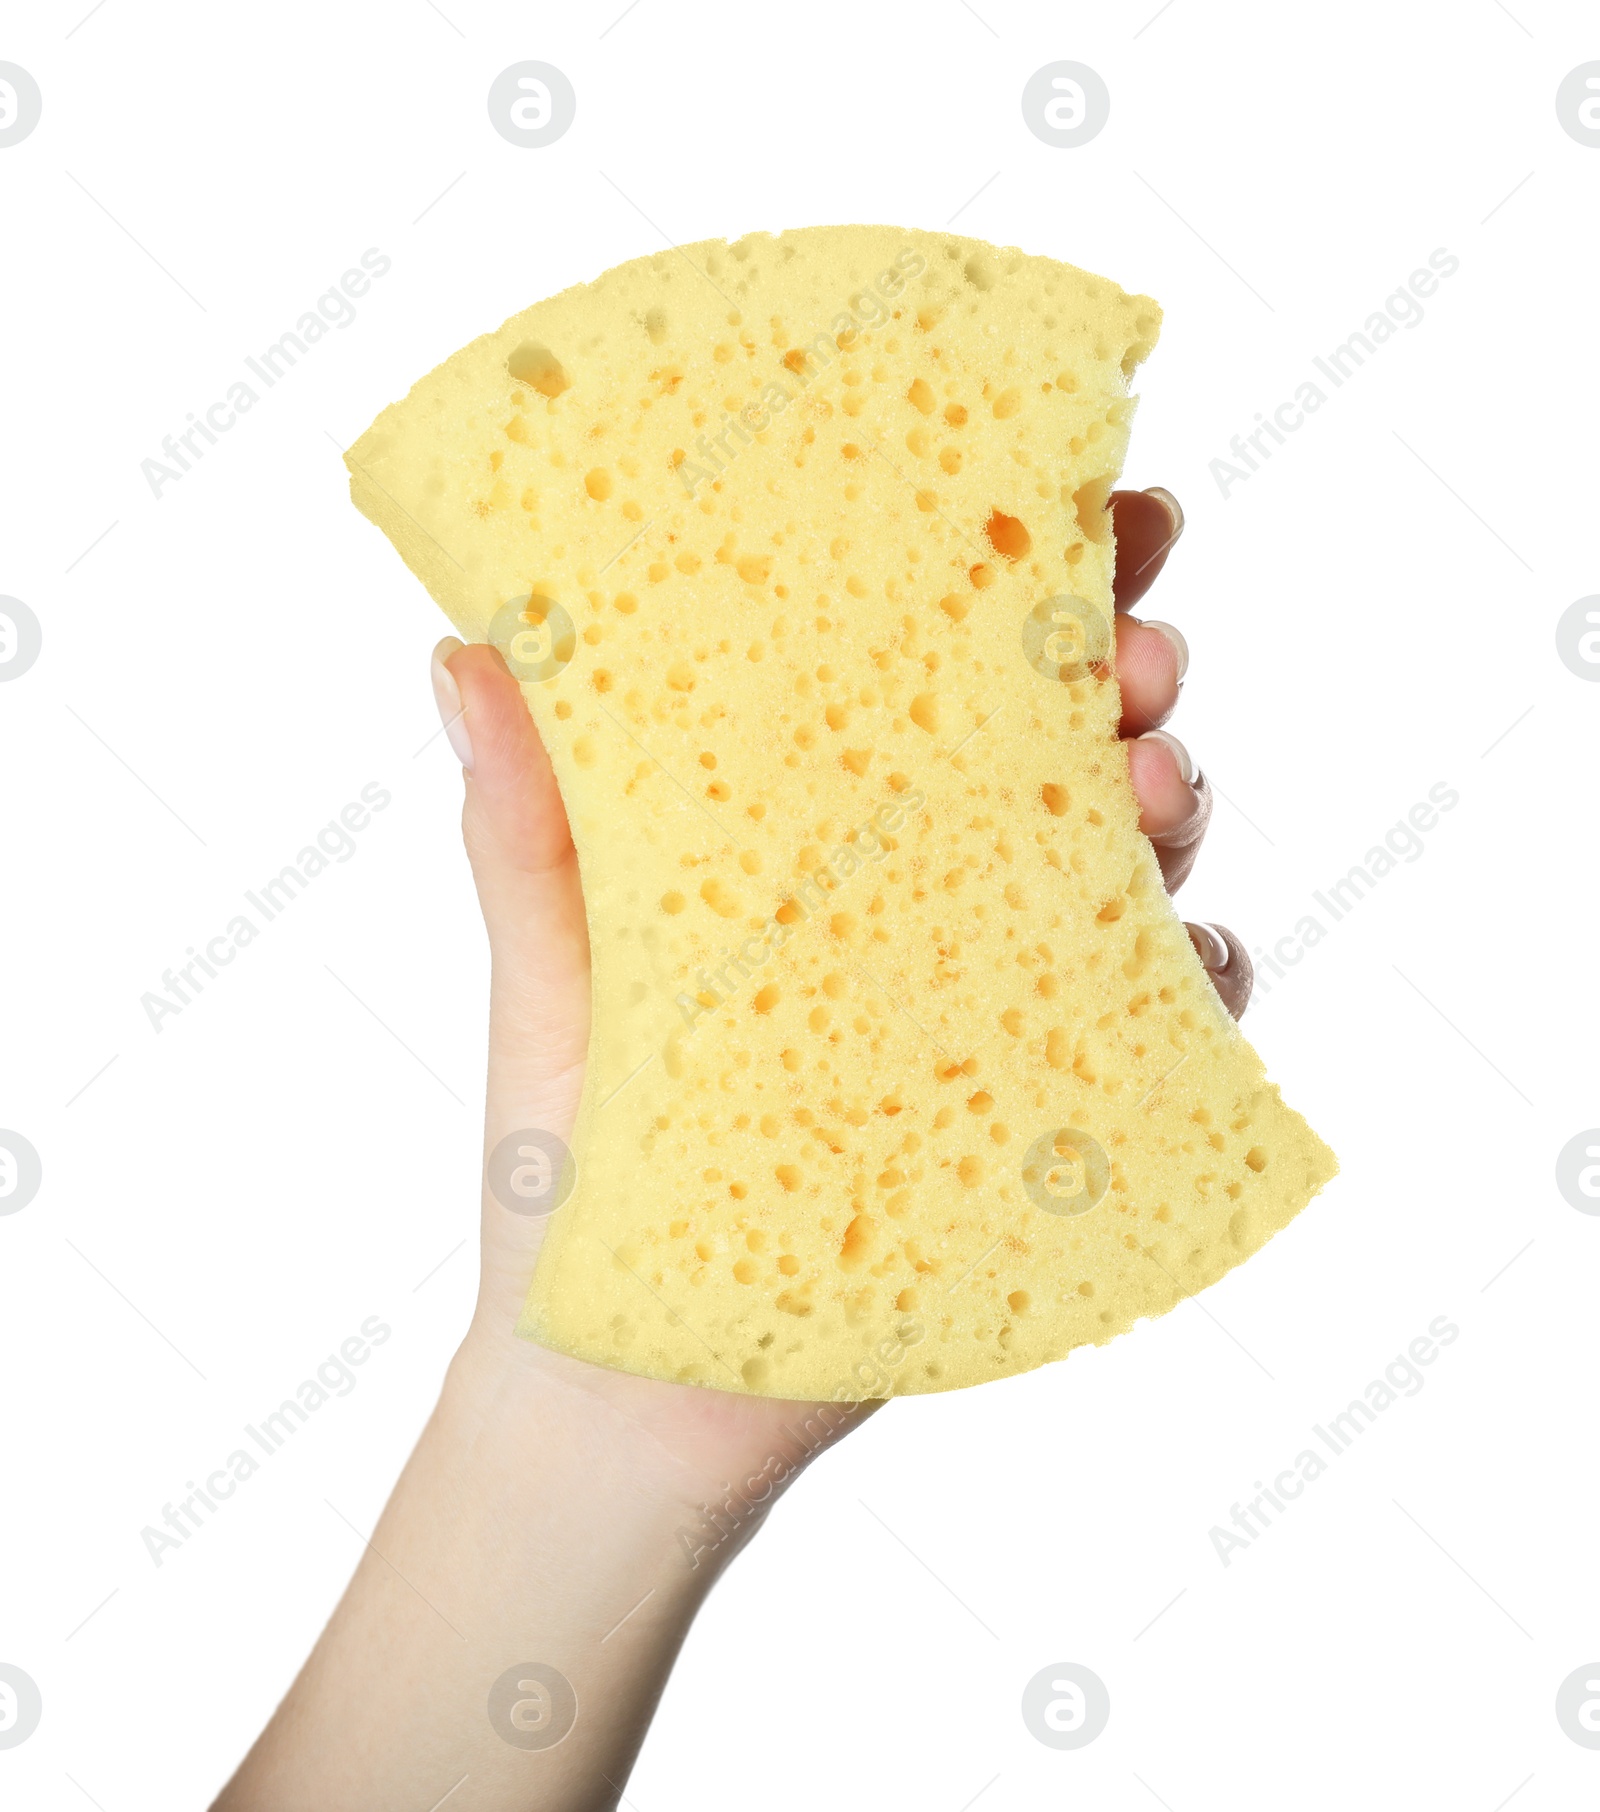 Photo of Woman holding new yellow sponge on white background, closeup